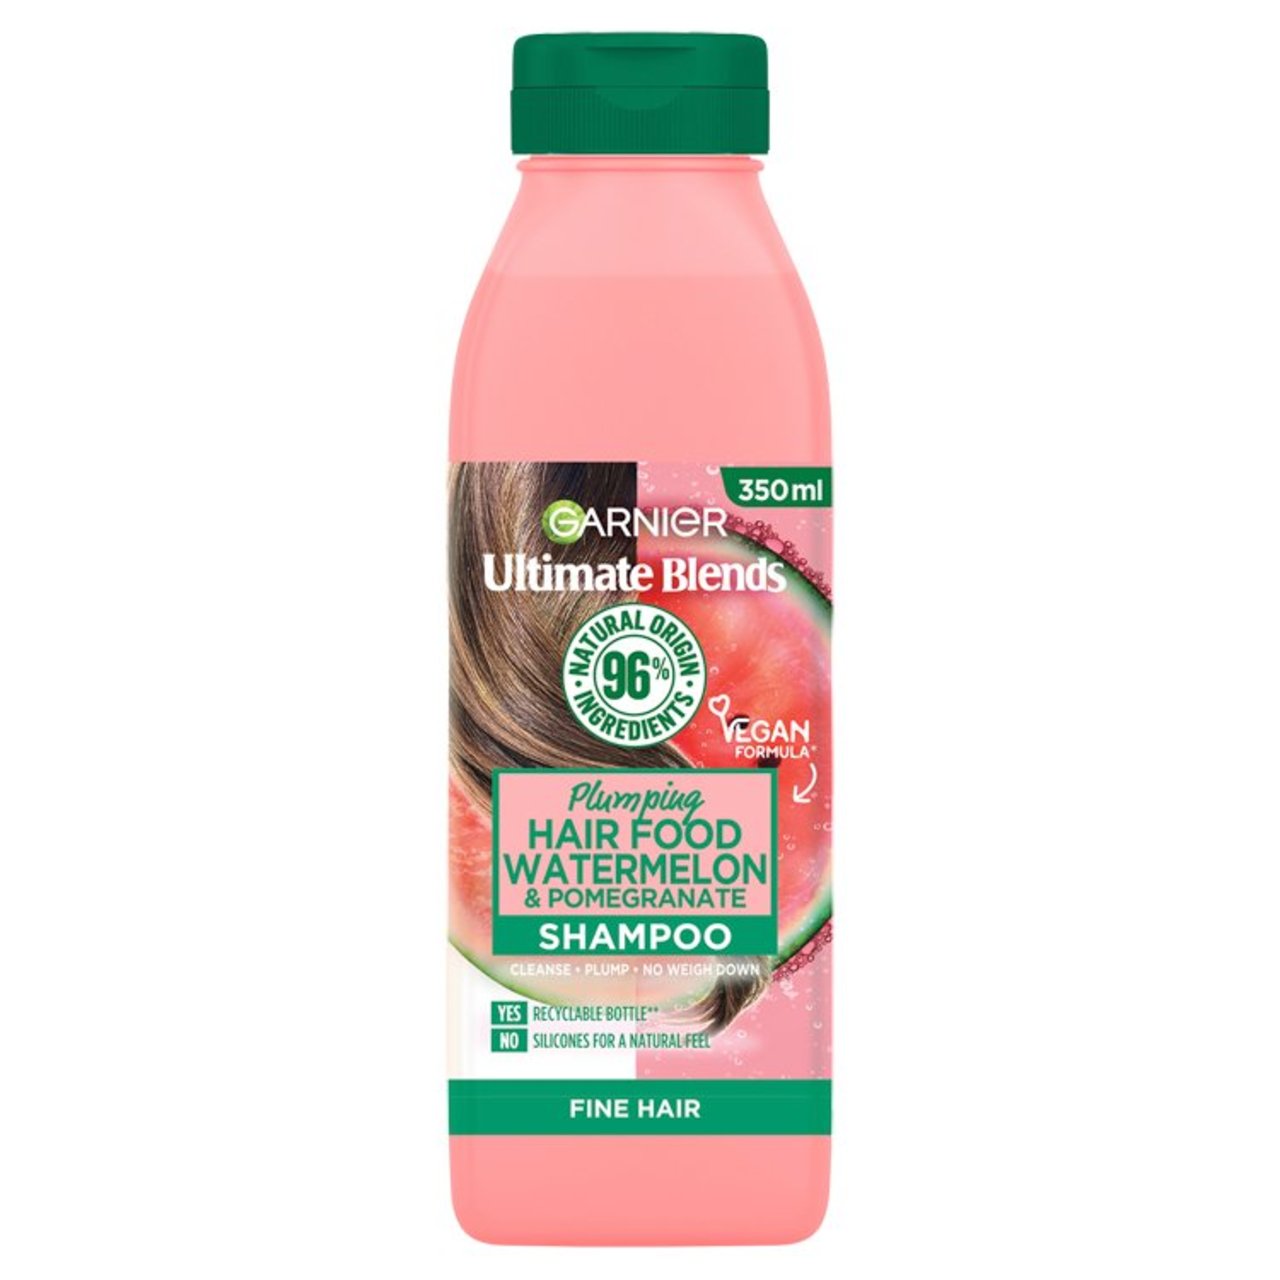 Garnier Ultimate Blends Hair Food Watermelon Shampoo